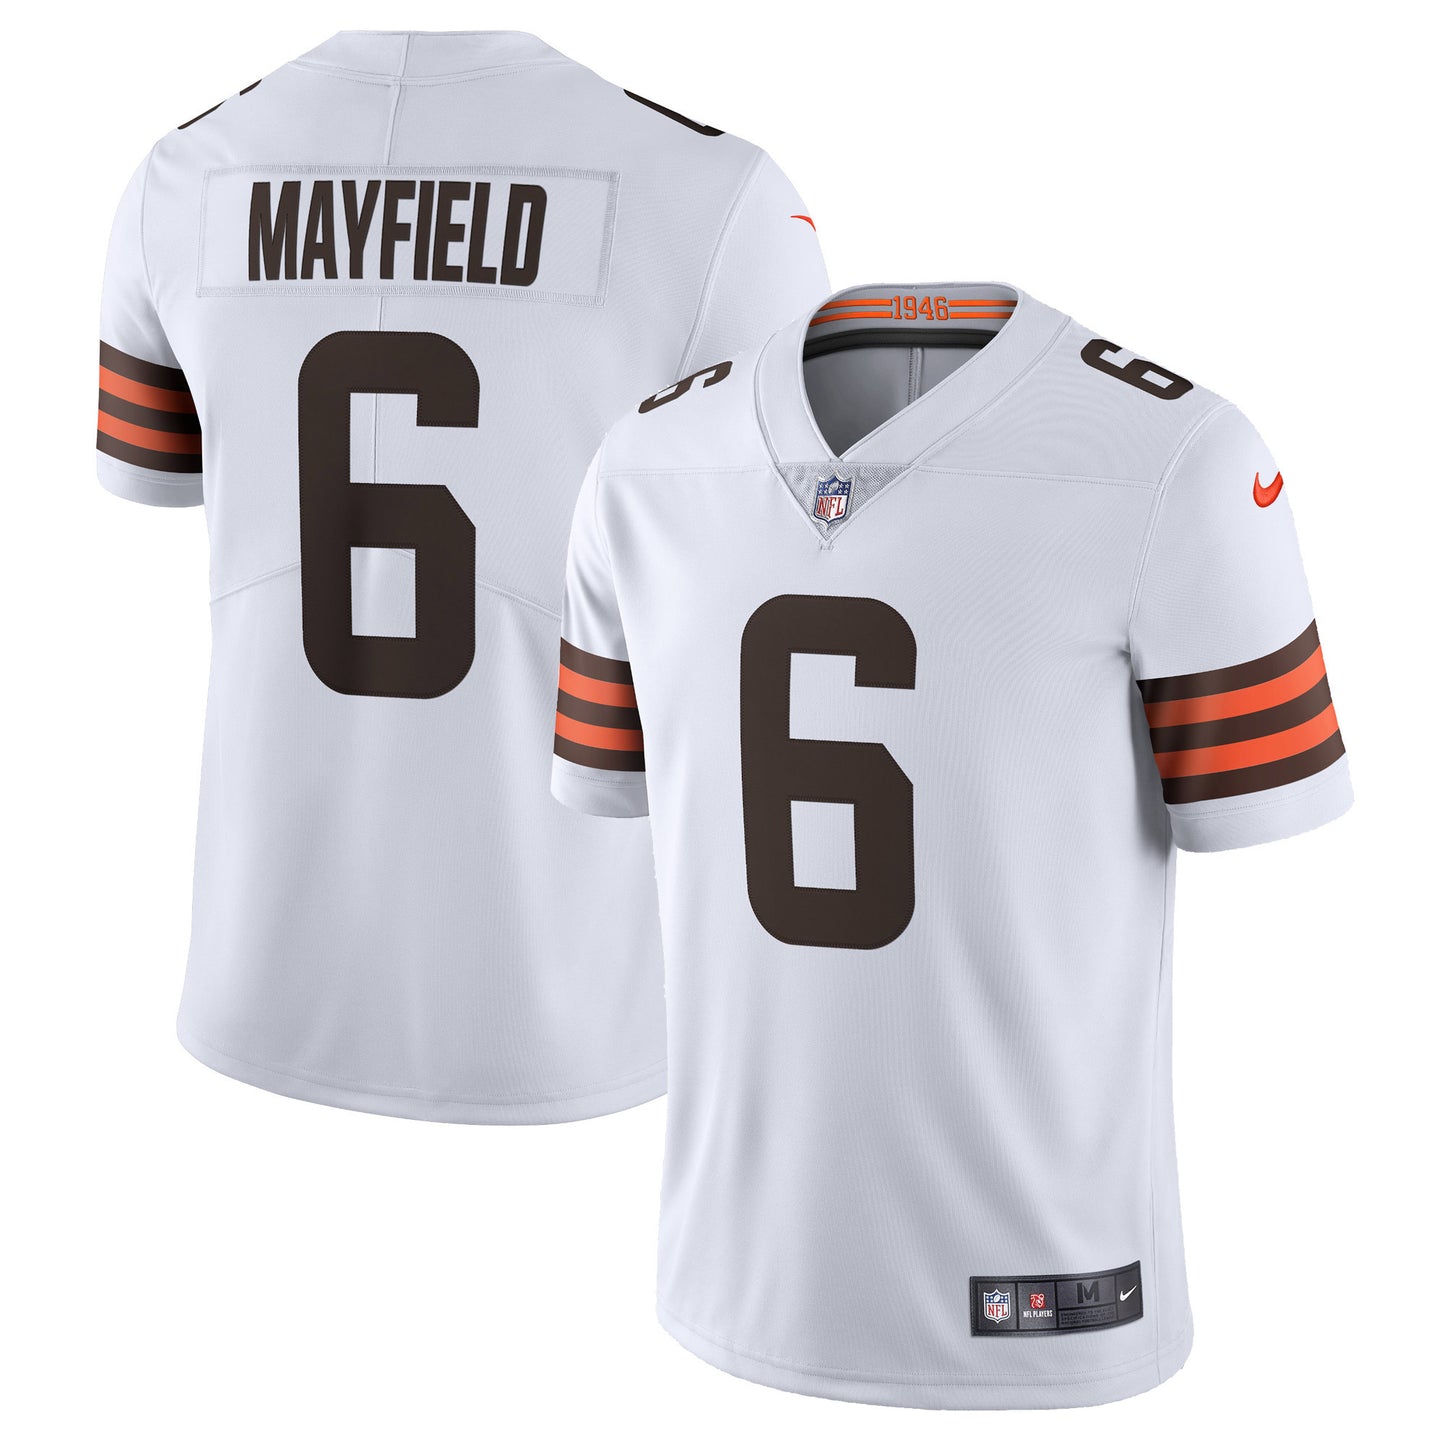 Baker Mayfield Cleveland Browns Nike Vapor Limited Jersey - White